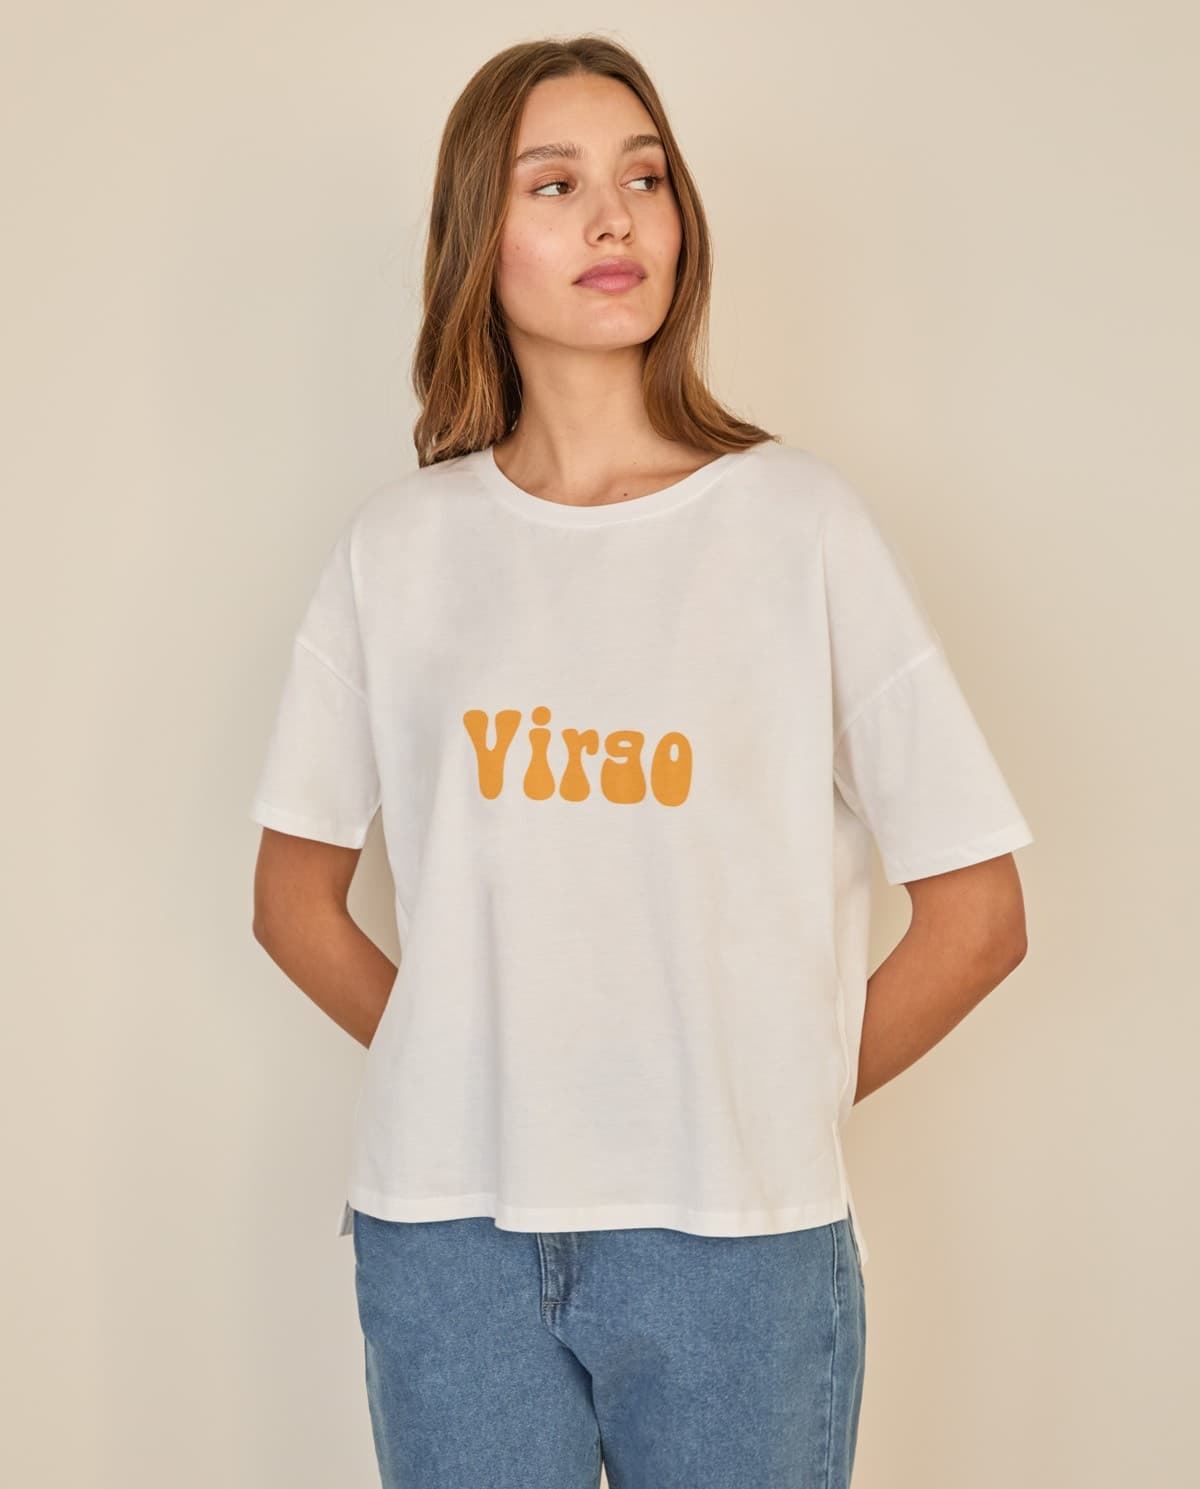 Camiseta Yerse virgo - Imagen 2